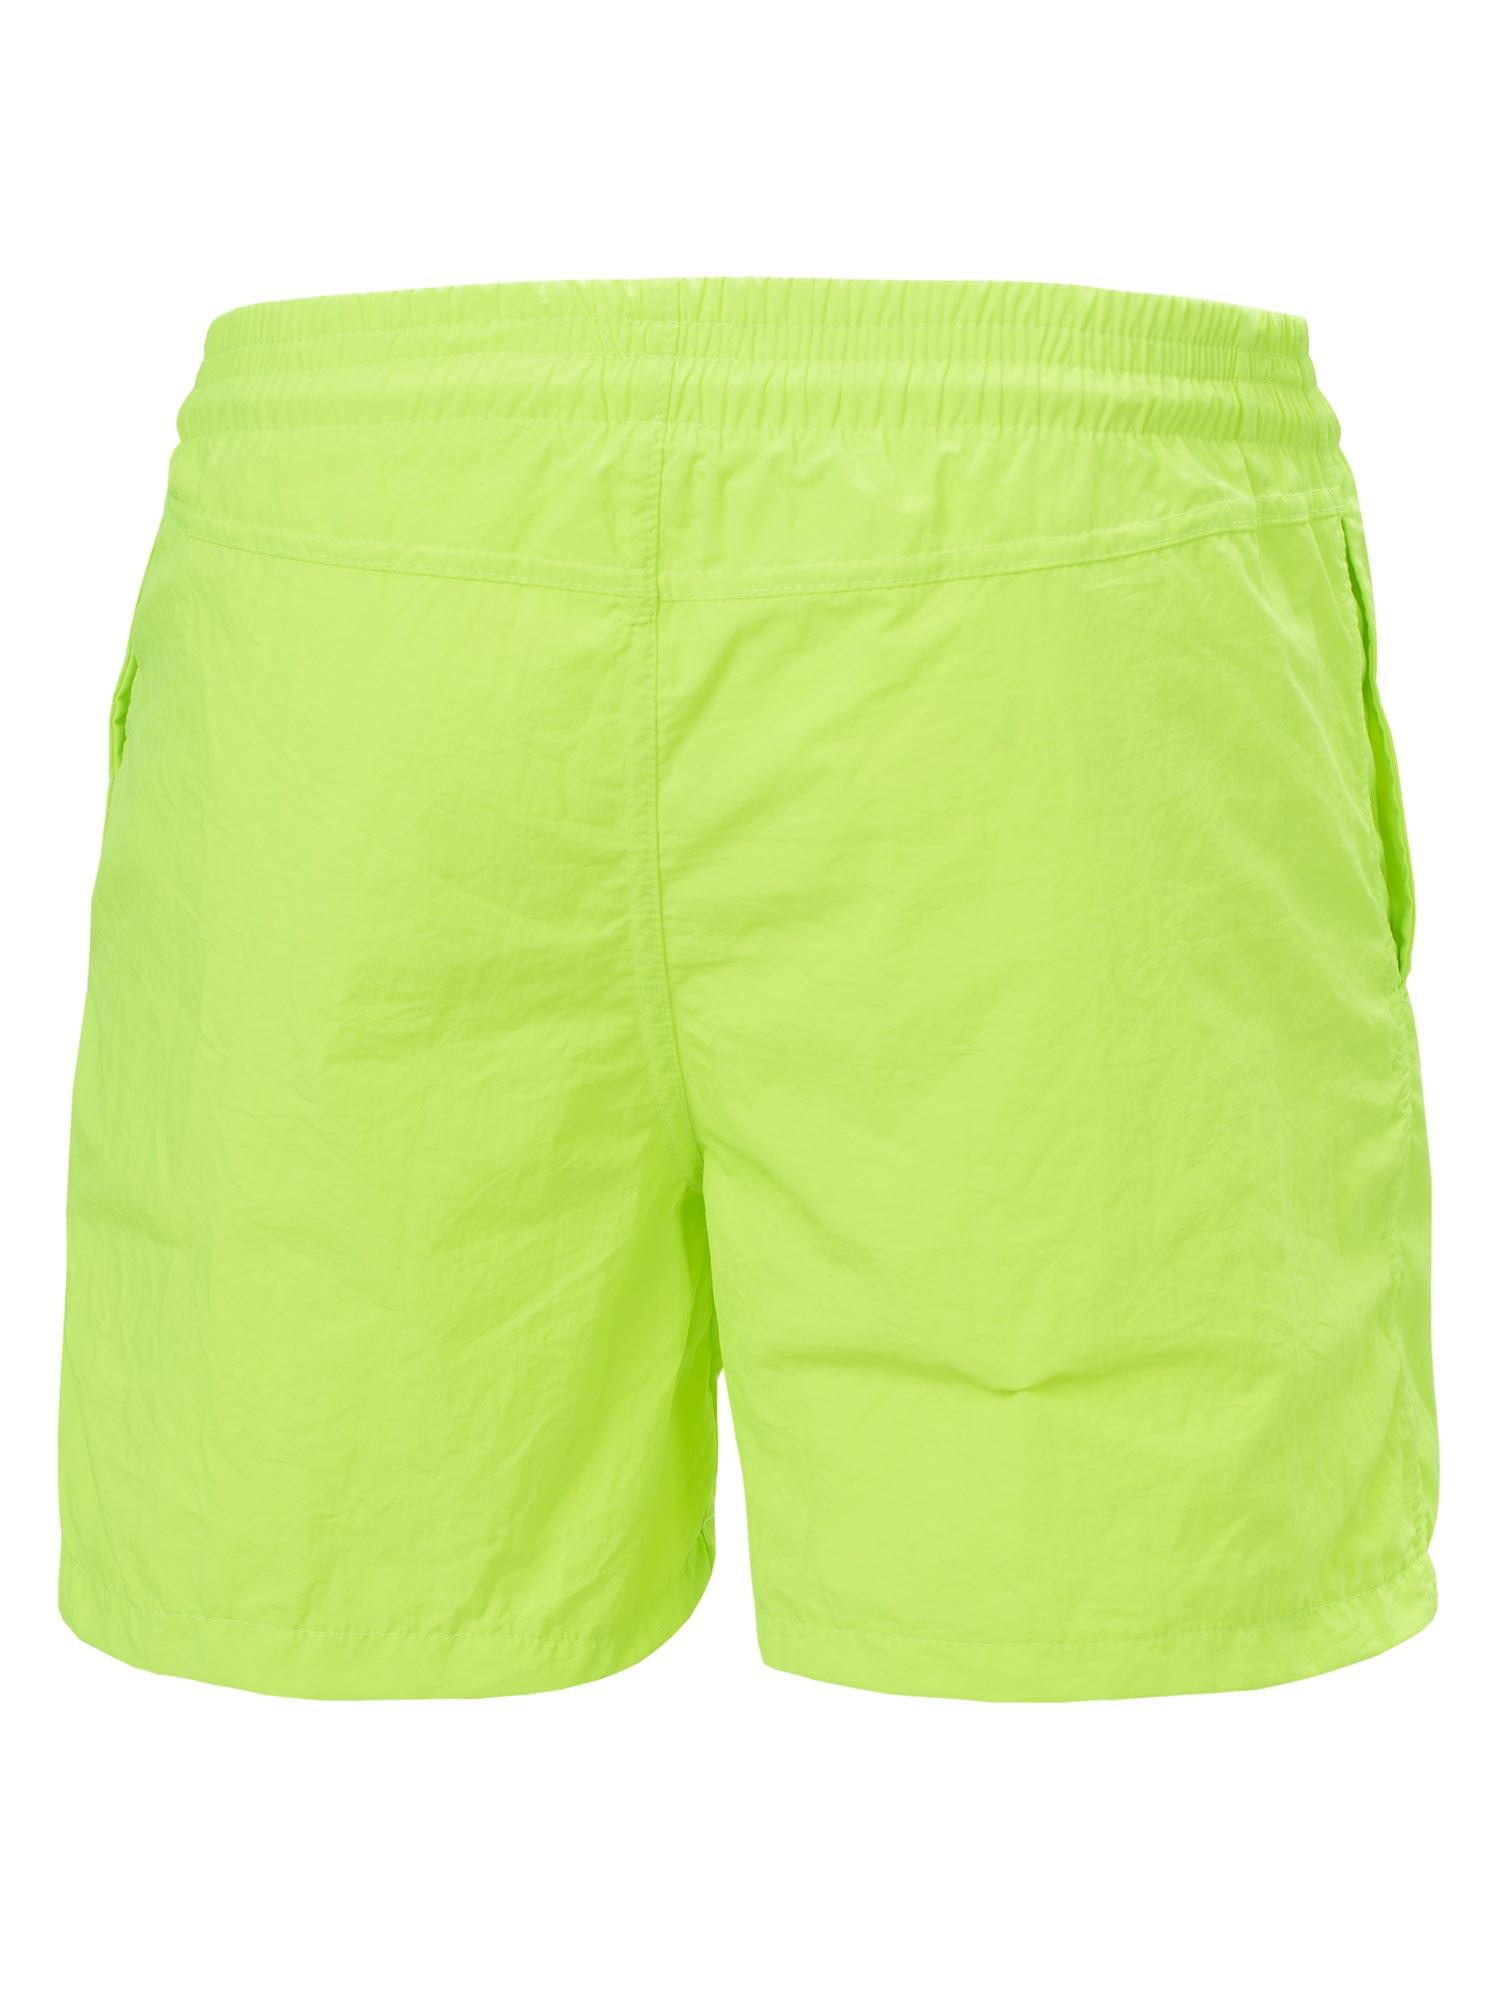 Selected image for BRILLE  Muški šorts za kupanje South Beach Swim zeleni